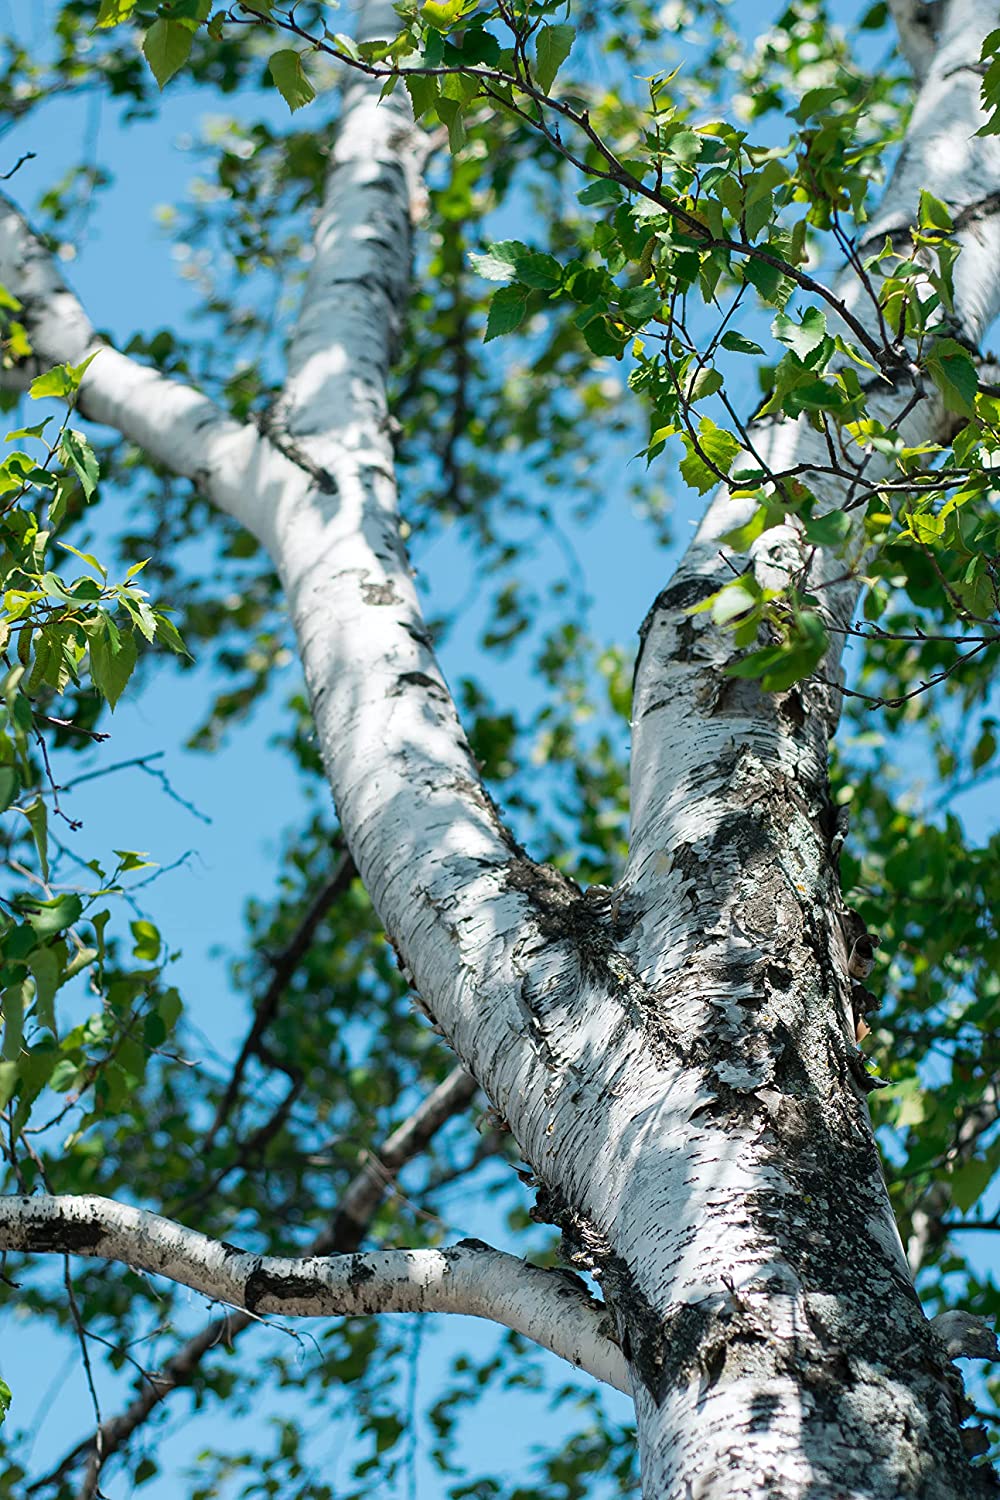 Paper Birch 1 Seedling - Betula papyrifera American White Birch, Canoe Birch Native Tree in Canada, Ontario Grown Live Plant